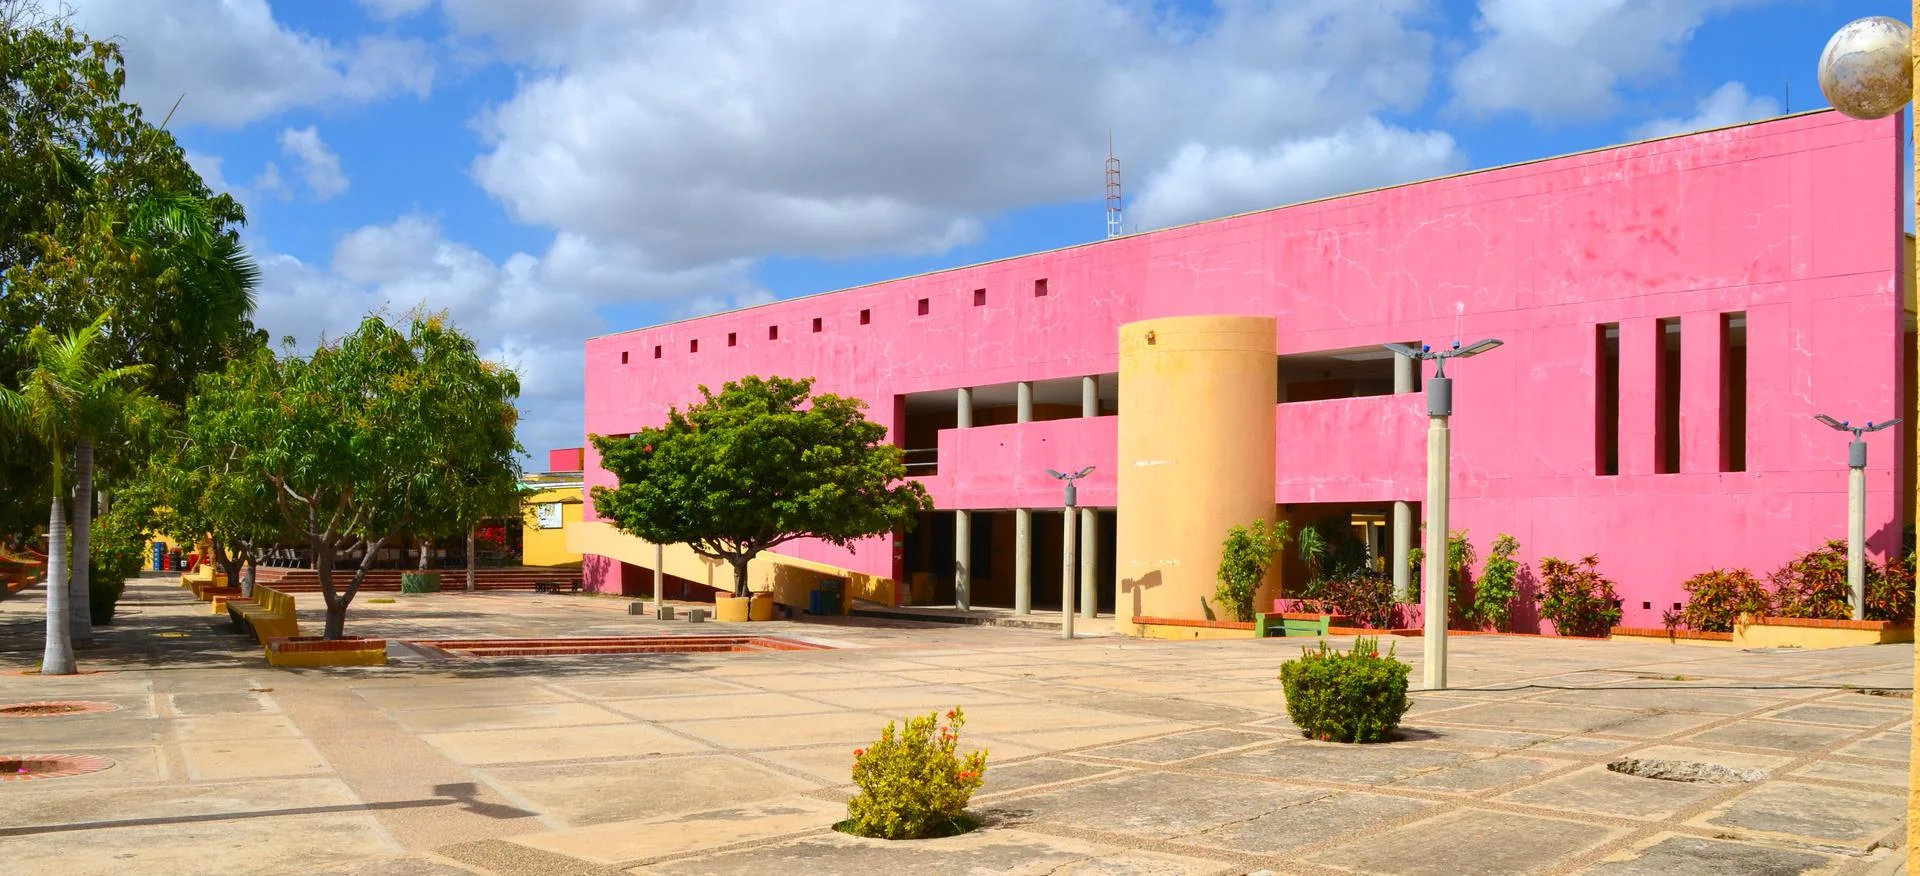 hoyennoticia.com, Uniguajira: Tercera del Caribe en Desempeño Institucional